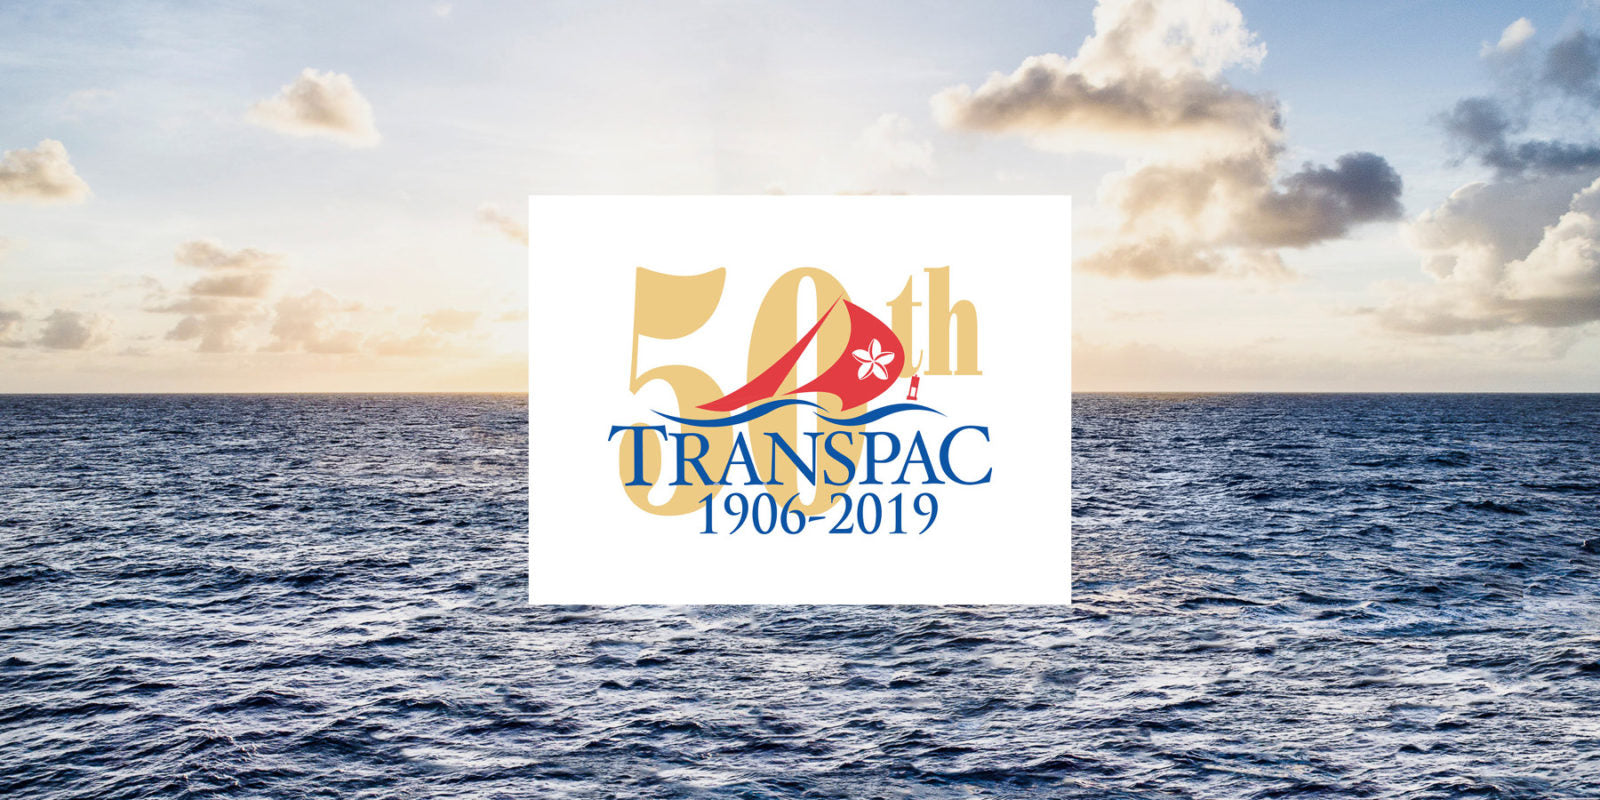 50th Transpac: Three North Sails Veterans Look Back